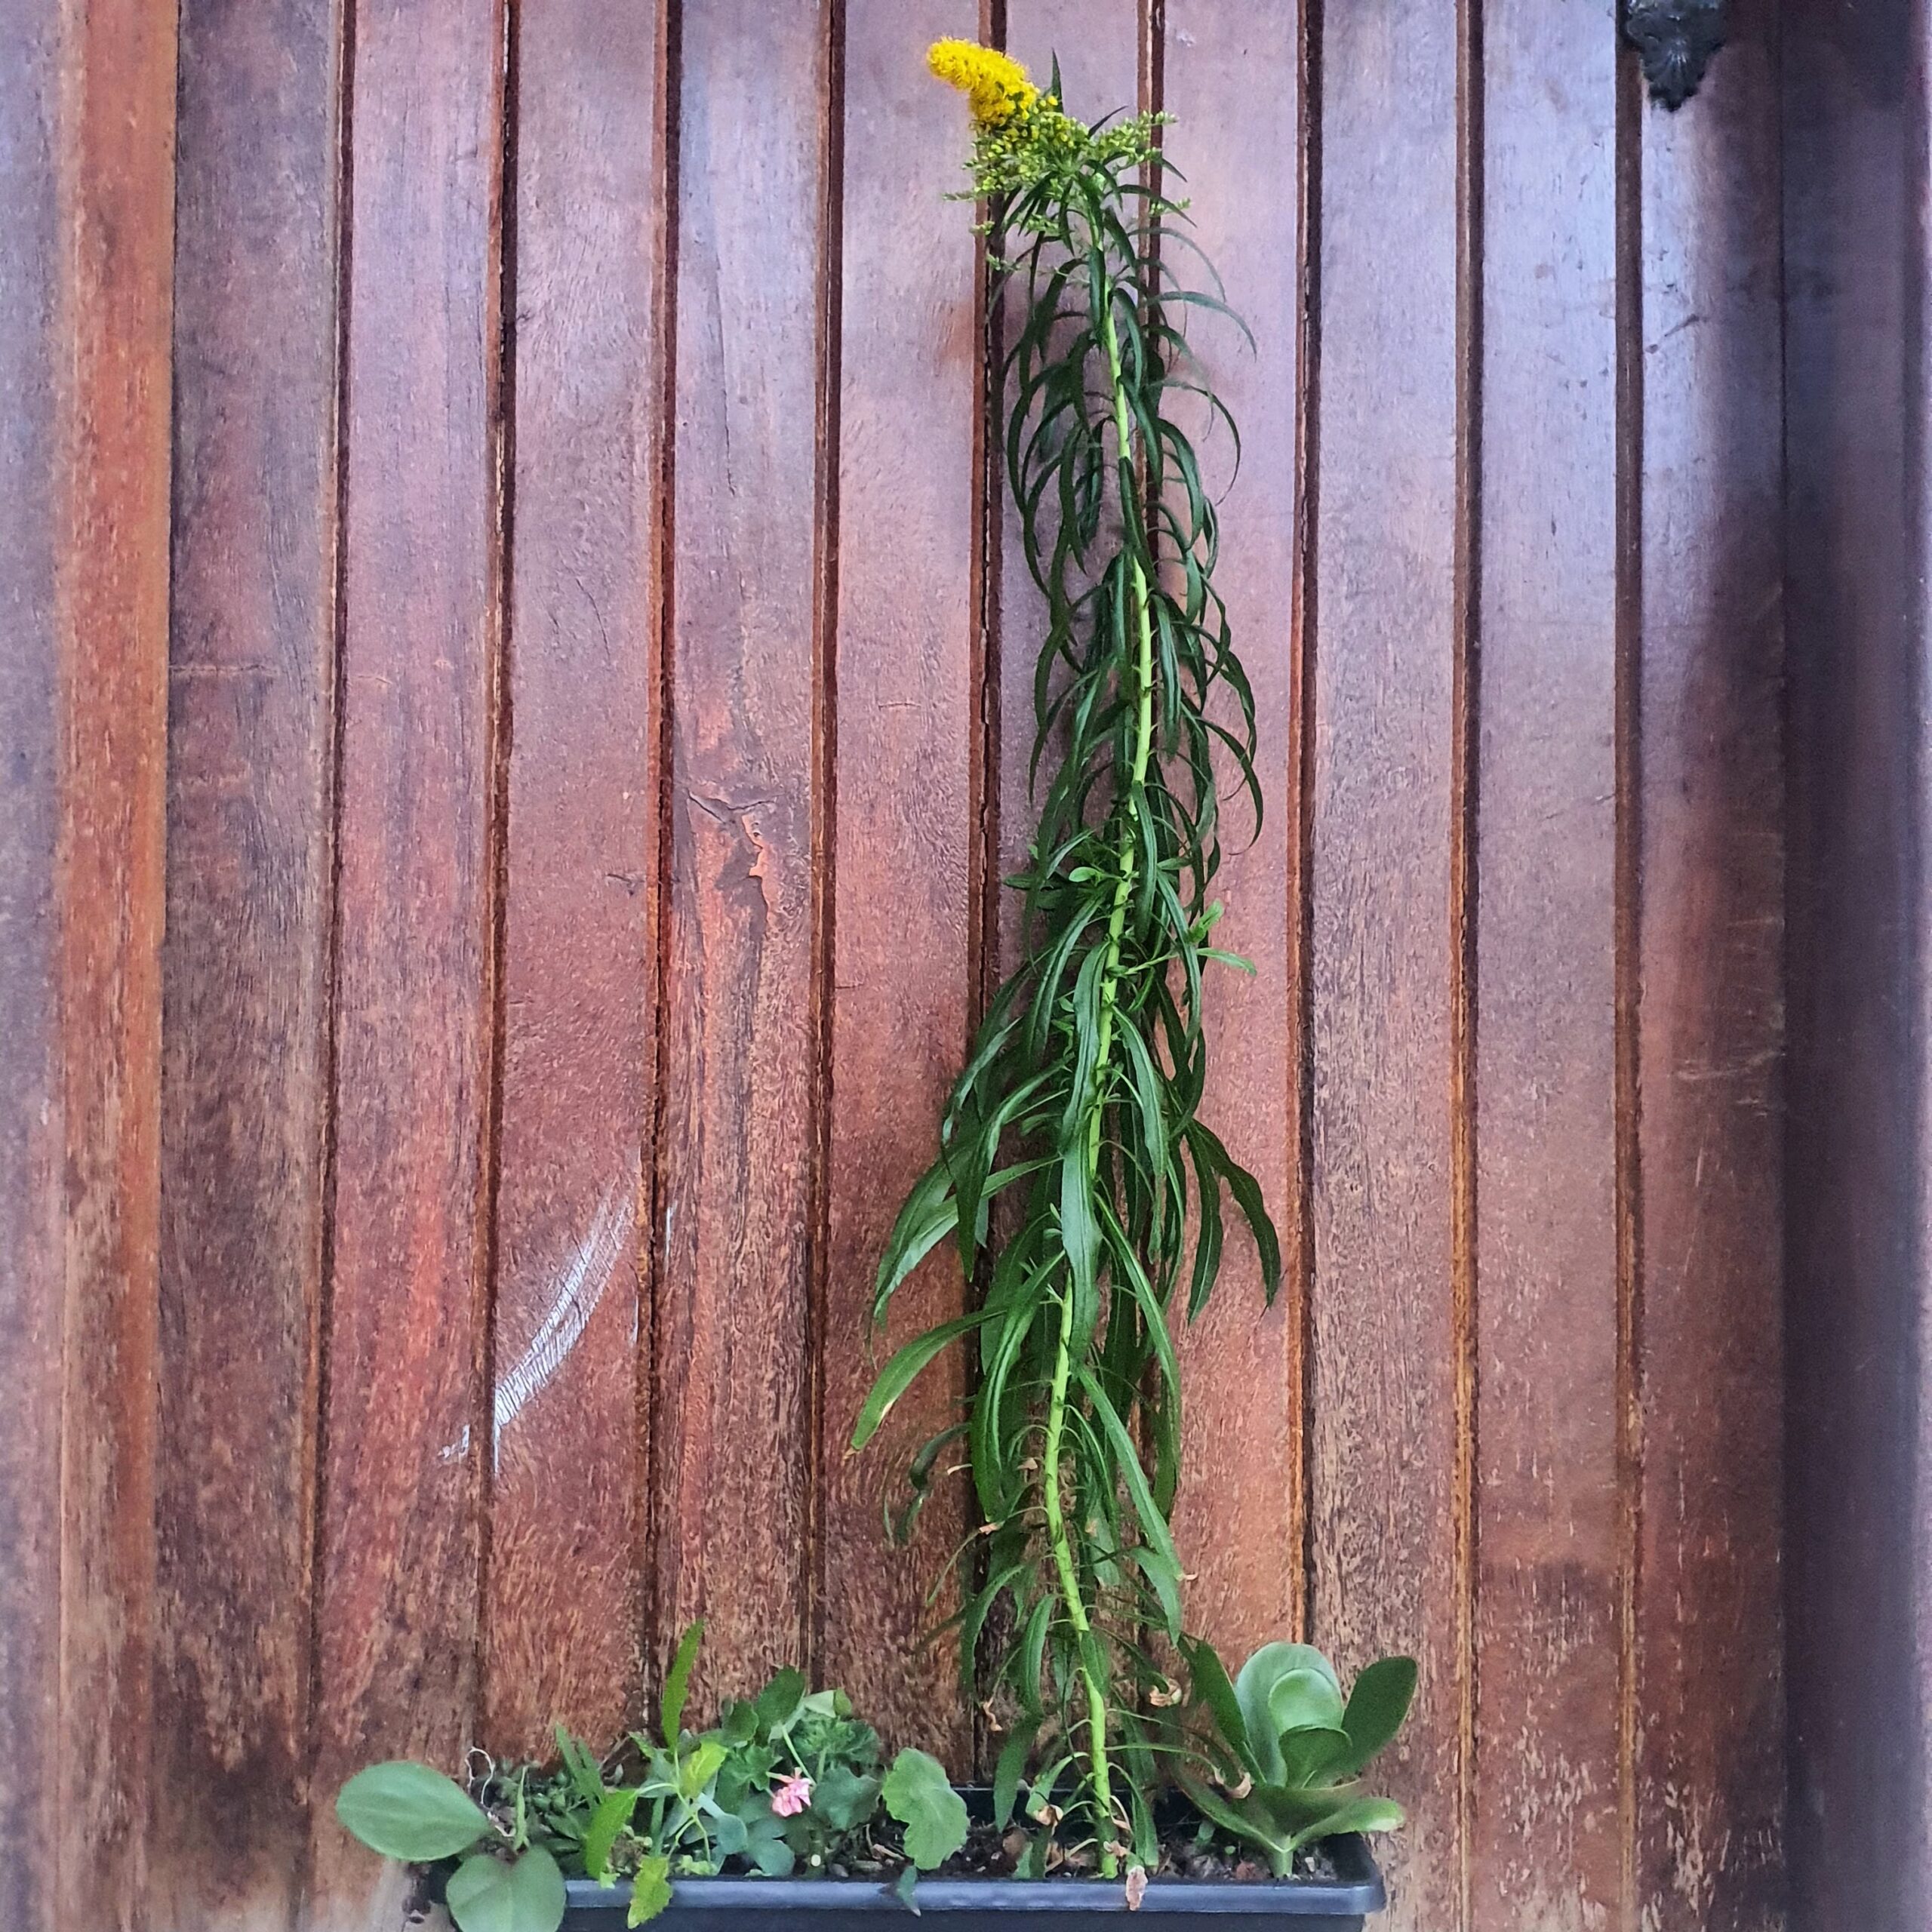 Arnica cultivada em jardineira.